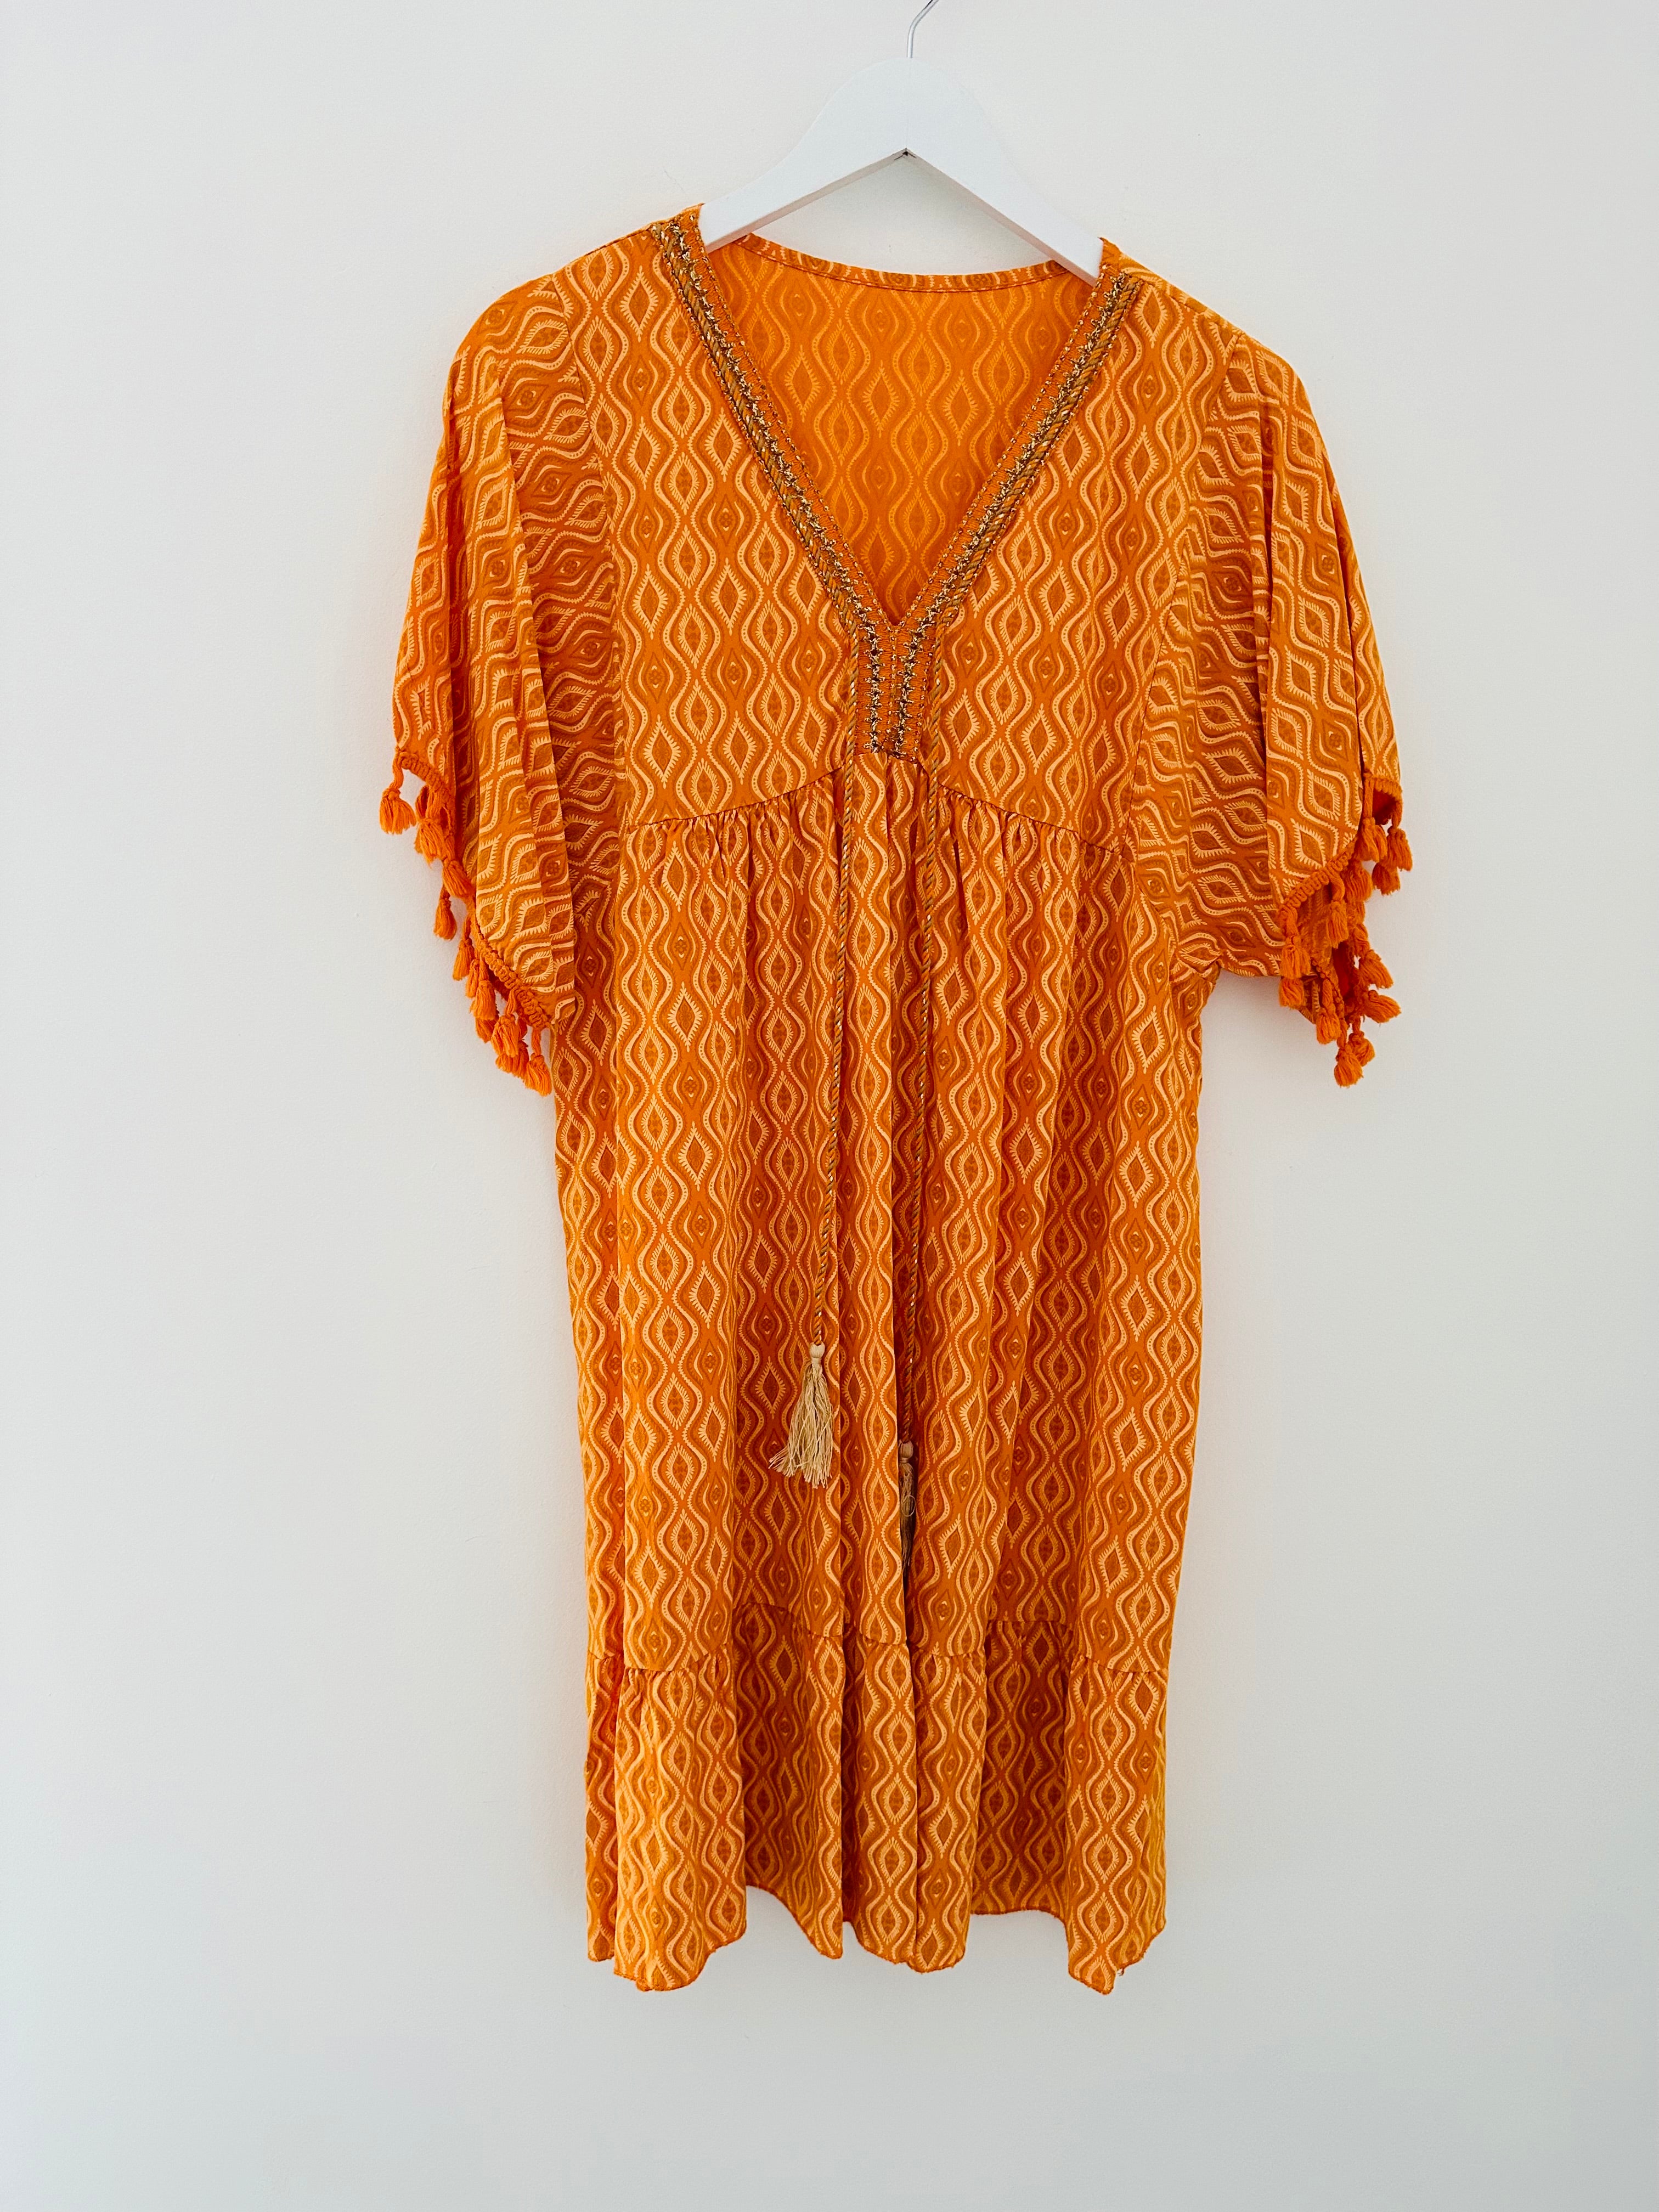 Tassel Dress in Tangerine